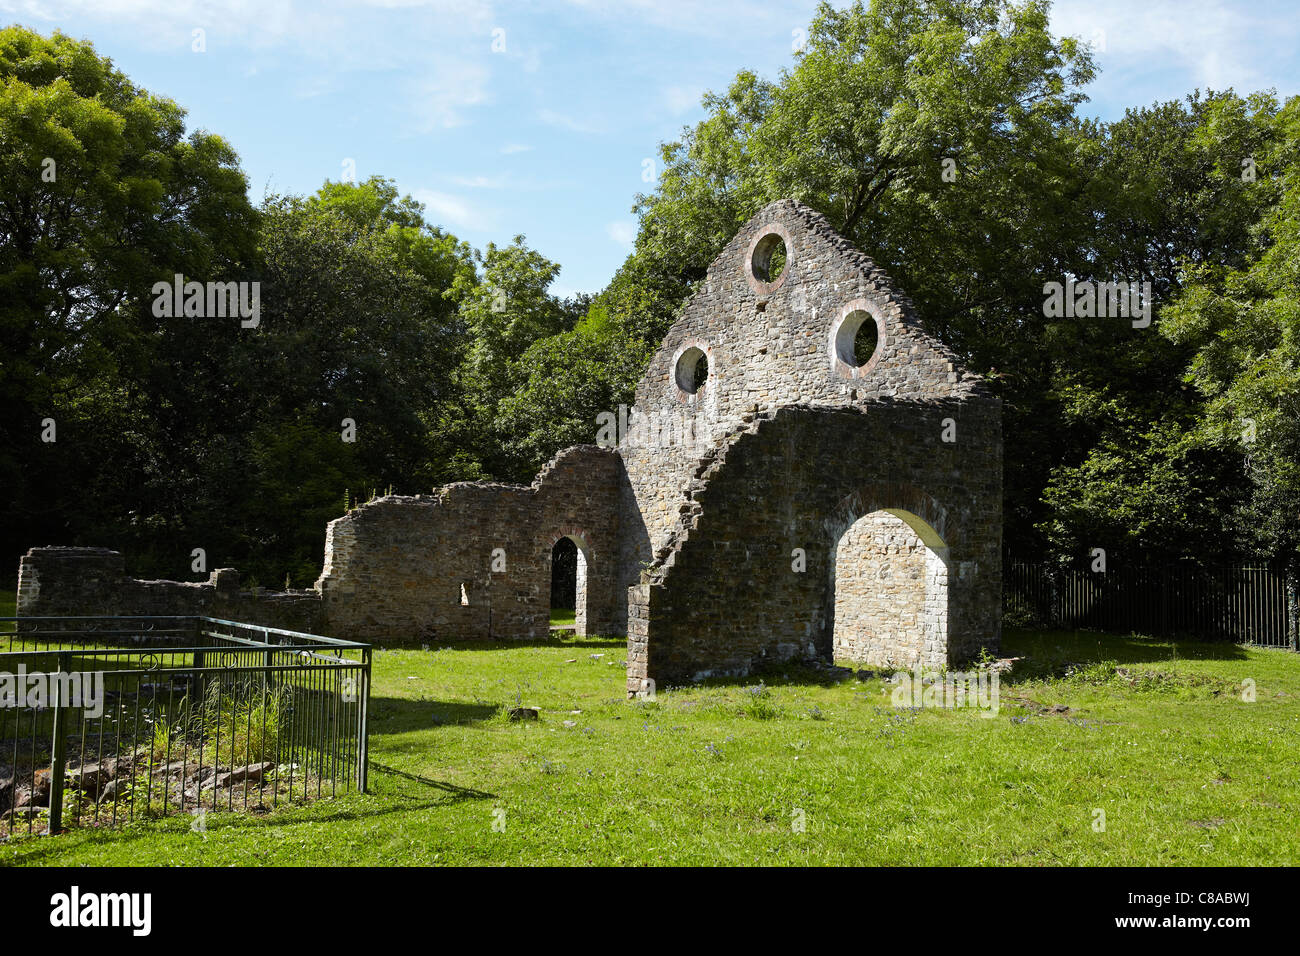 The Cast House, Cefn Cribwr Ironworks ruins, Glamorgan, Wales, UK Stock Photo